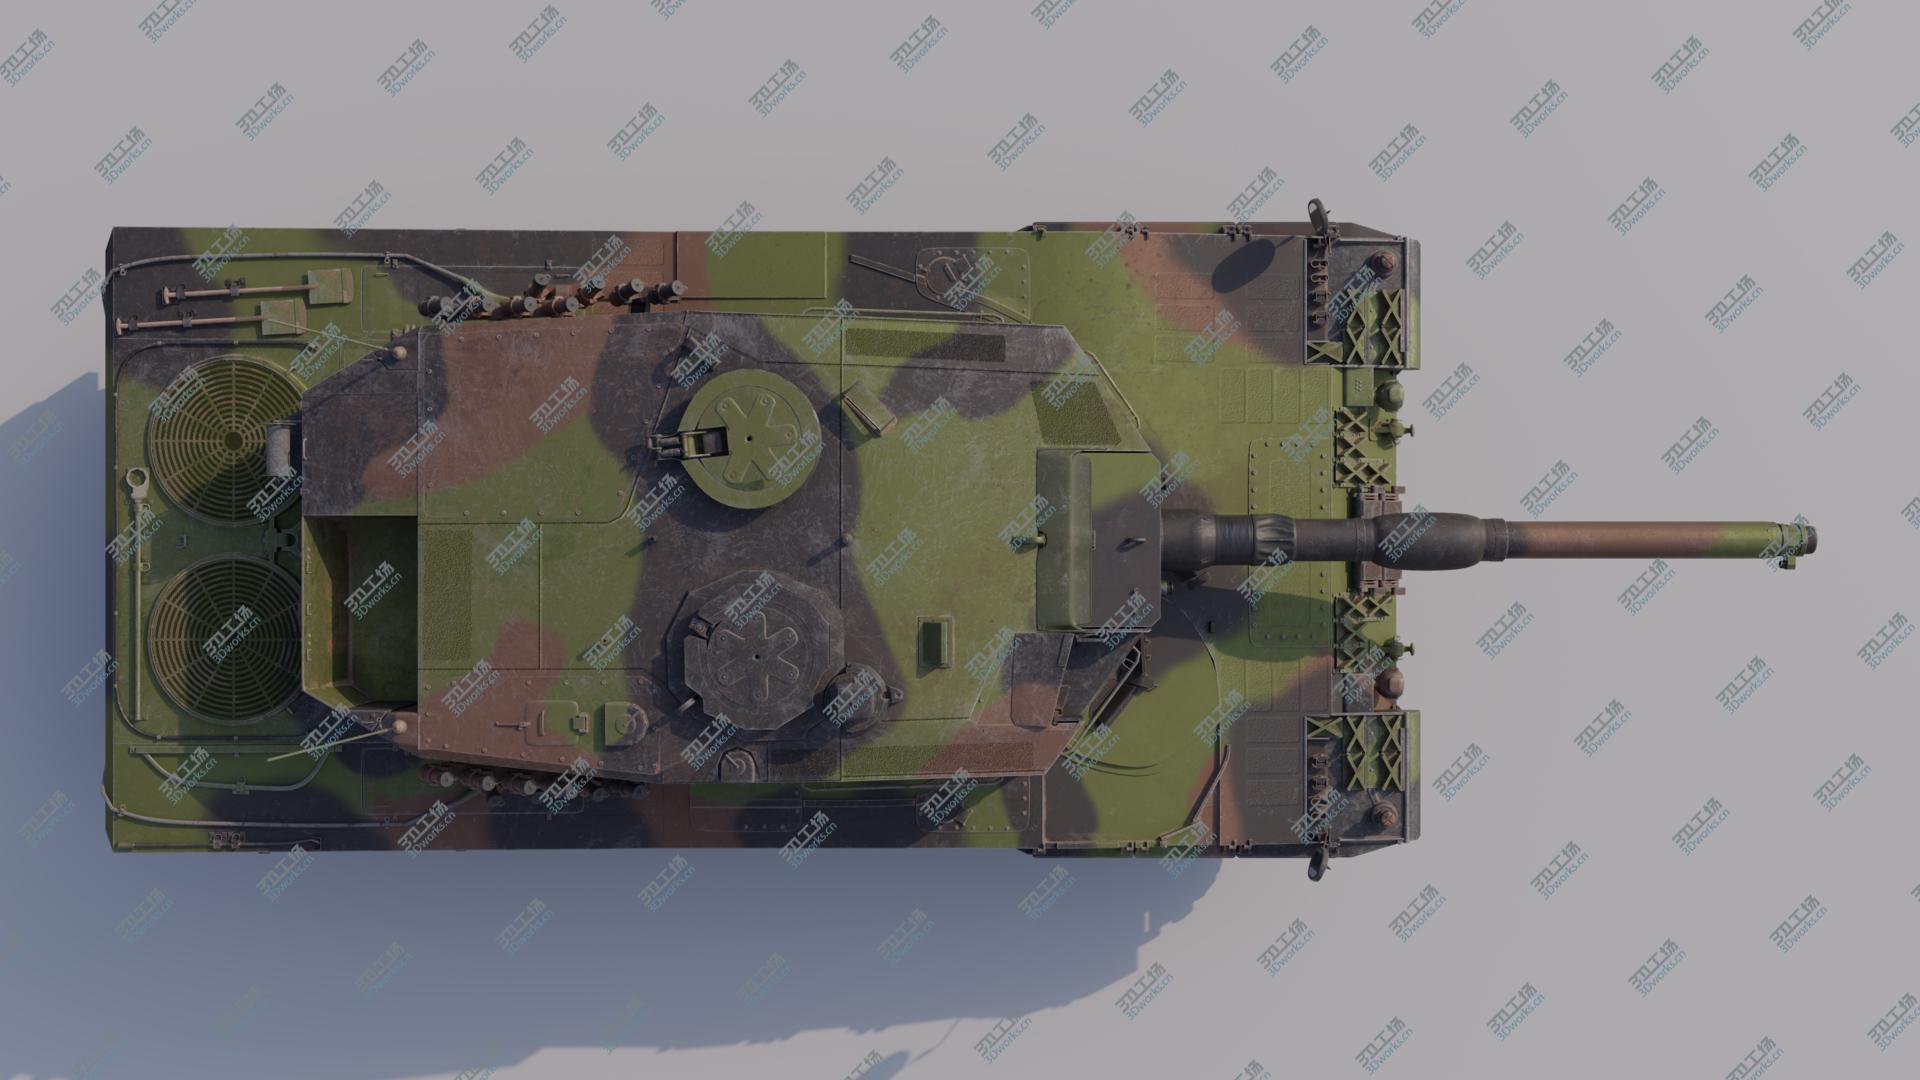 images/goods_img/202105071/3D Leopard 2 A4 Germen Battle Tank model/5.jpg